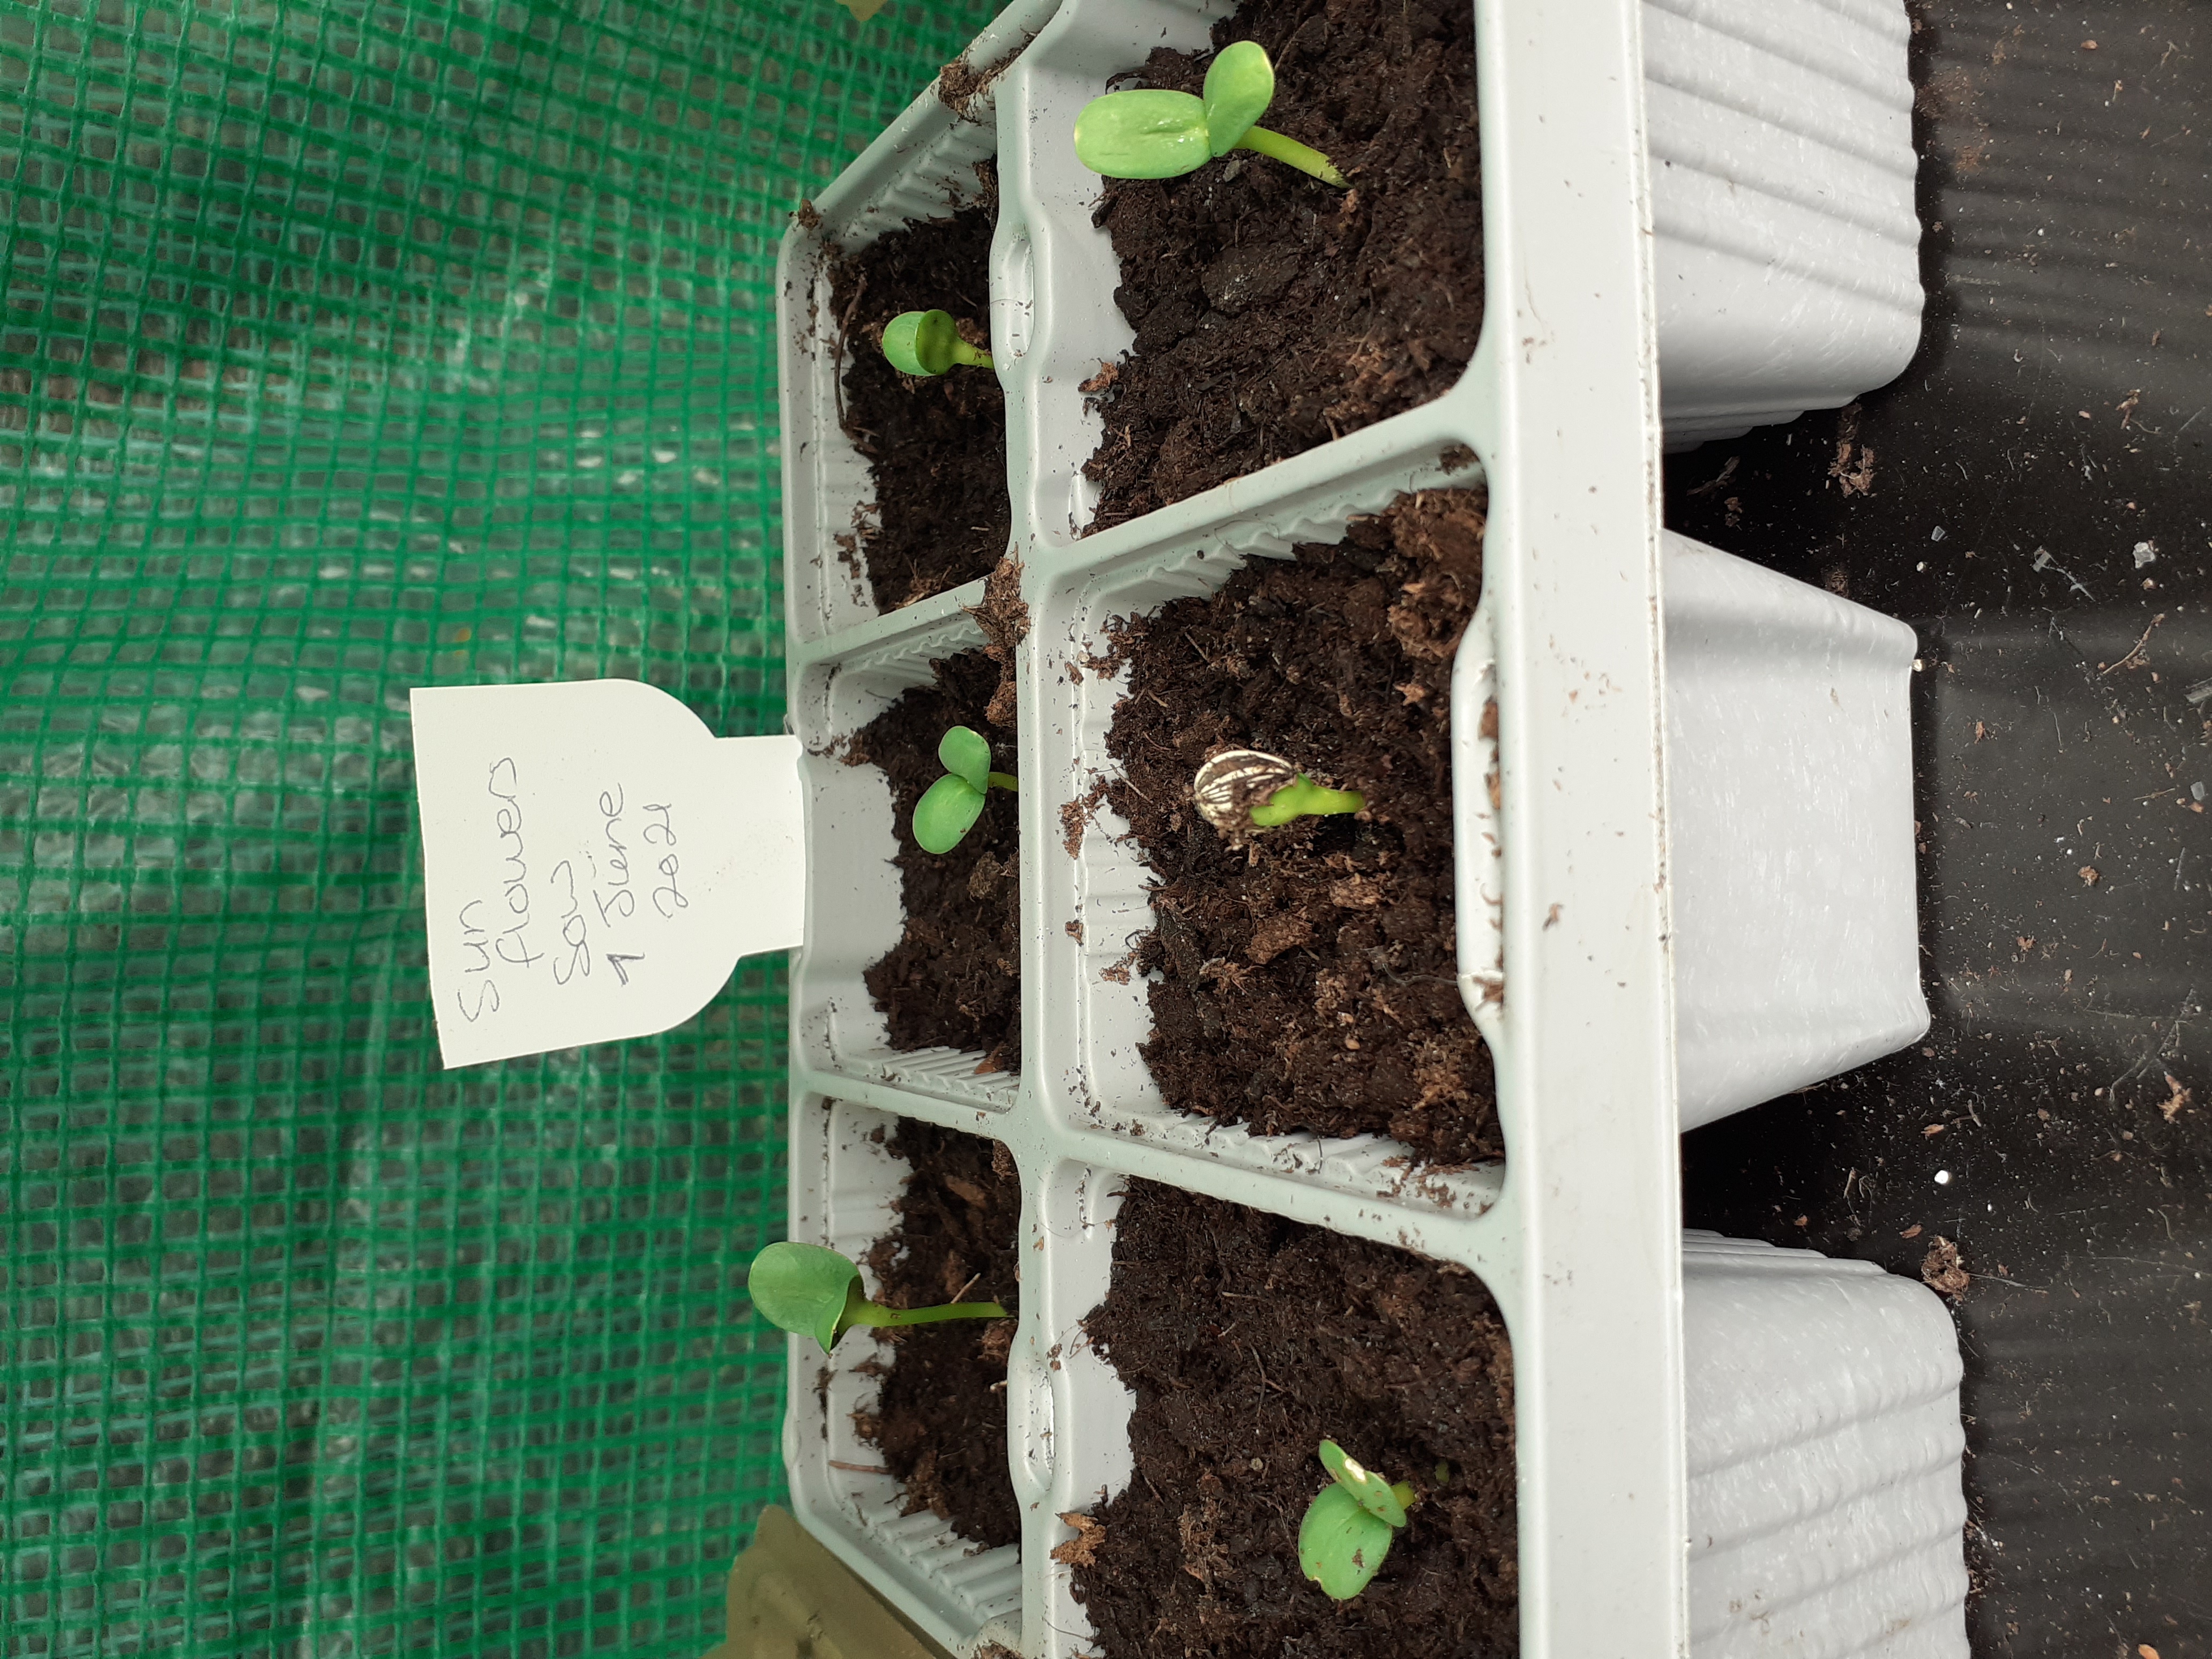 Derek & Karen W - Send seedling growing within 4 days. All 10 sunflowers growing.